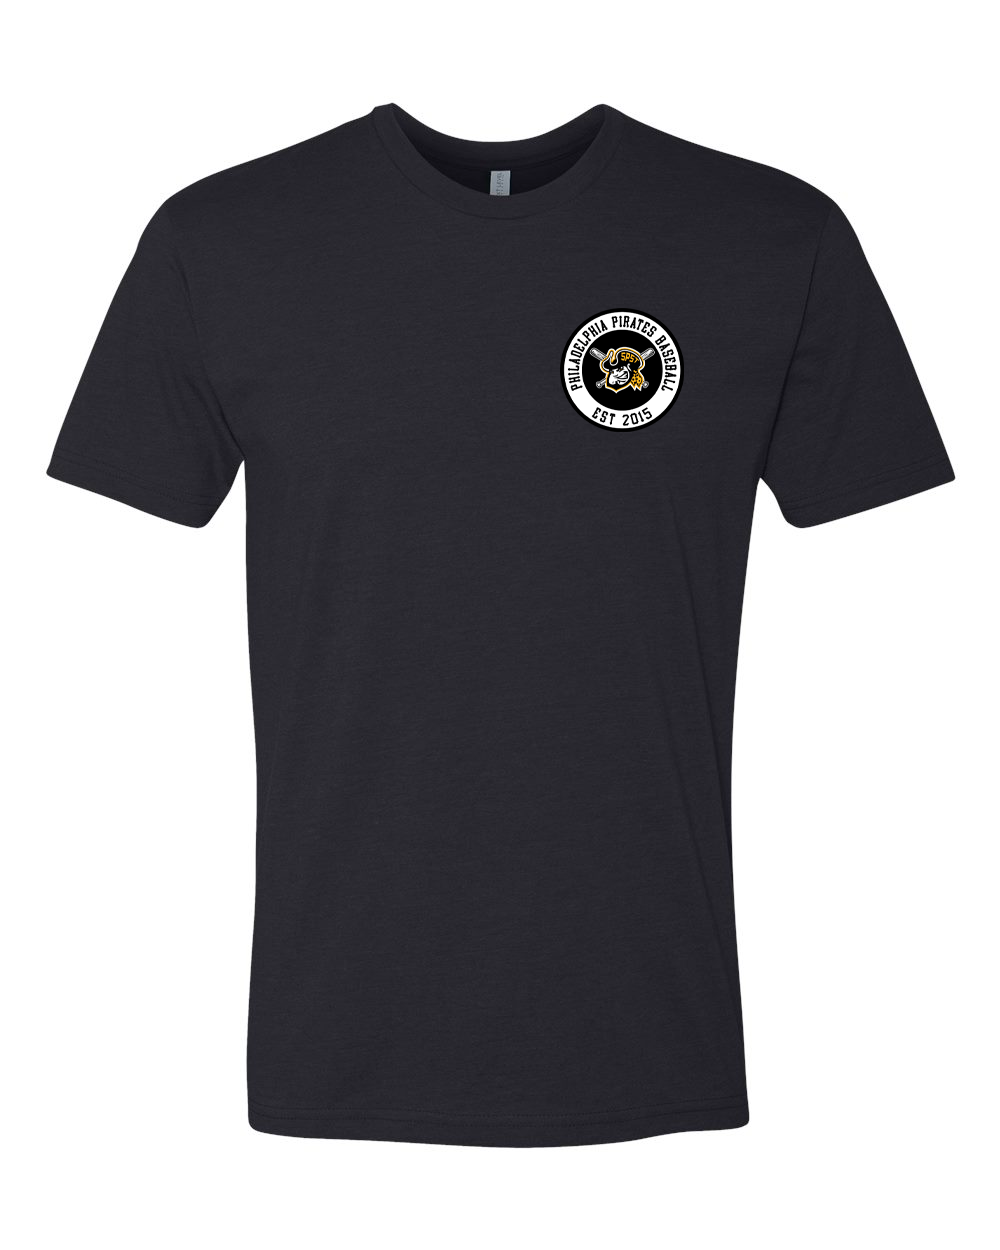 SPST Pirate Men's CVC T-Shirt - 6210